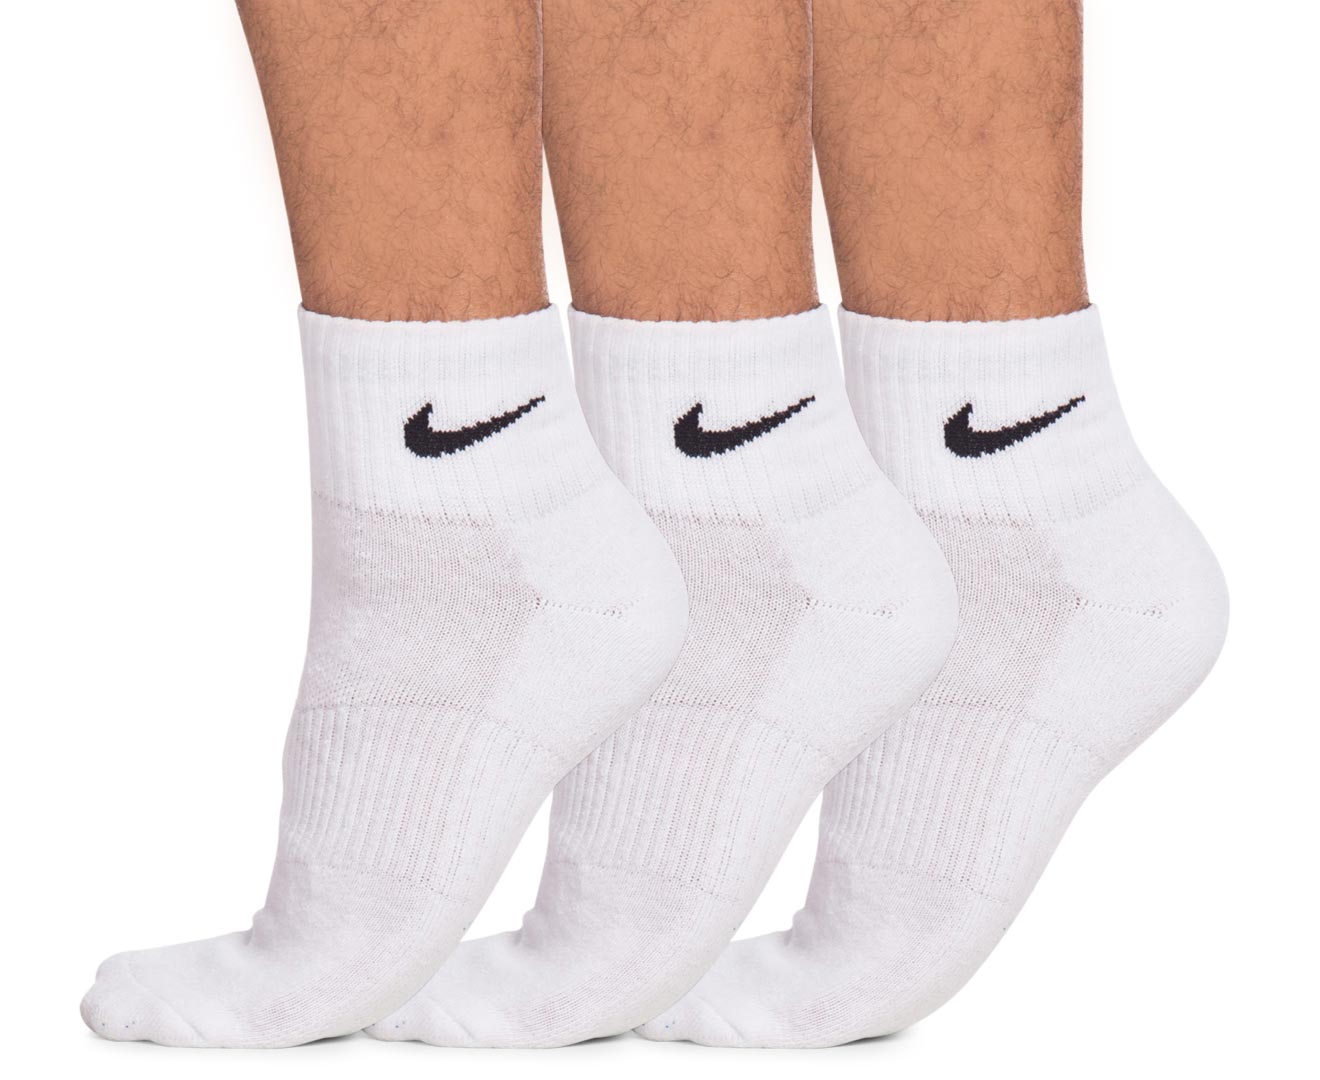 Nike Men's Performance Cotton Quarter Socks 3-Pack - White | Catch.com.au